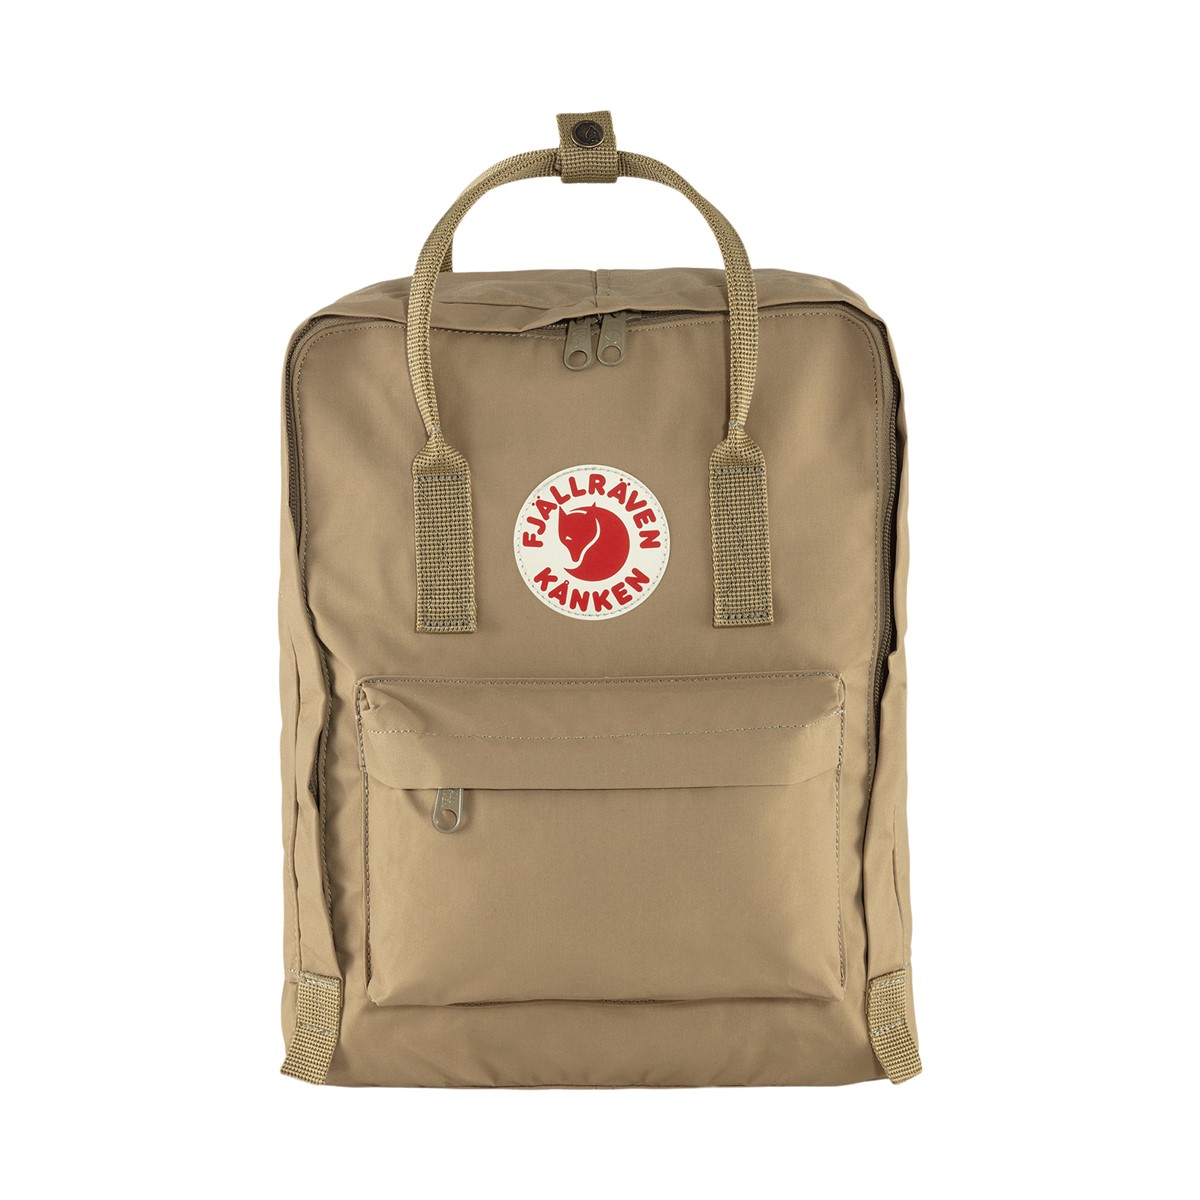 Kanken Backpack in Grey/Brown